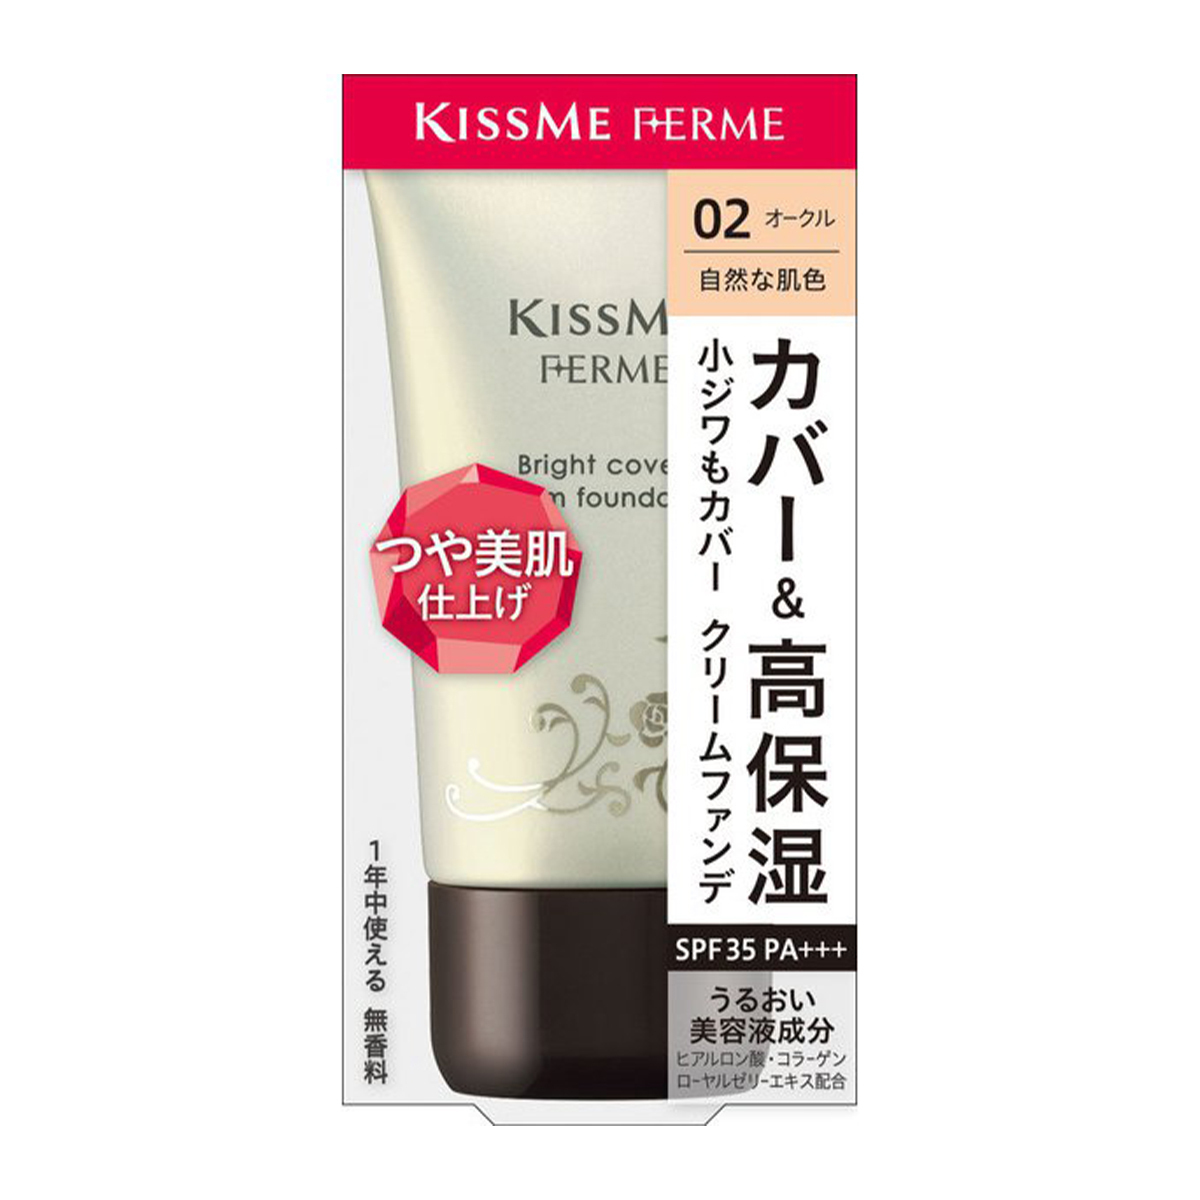 Kiss Me キスミー フェルム 明るくカバー クリームファンデ 02 自然な肌色 25g KISS ME FERME クリーム、エマルジョンファンデーションの商品画像